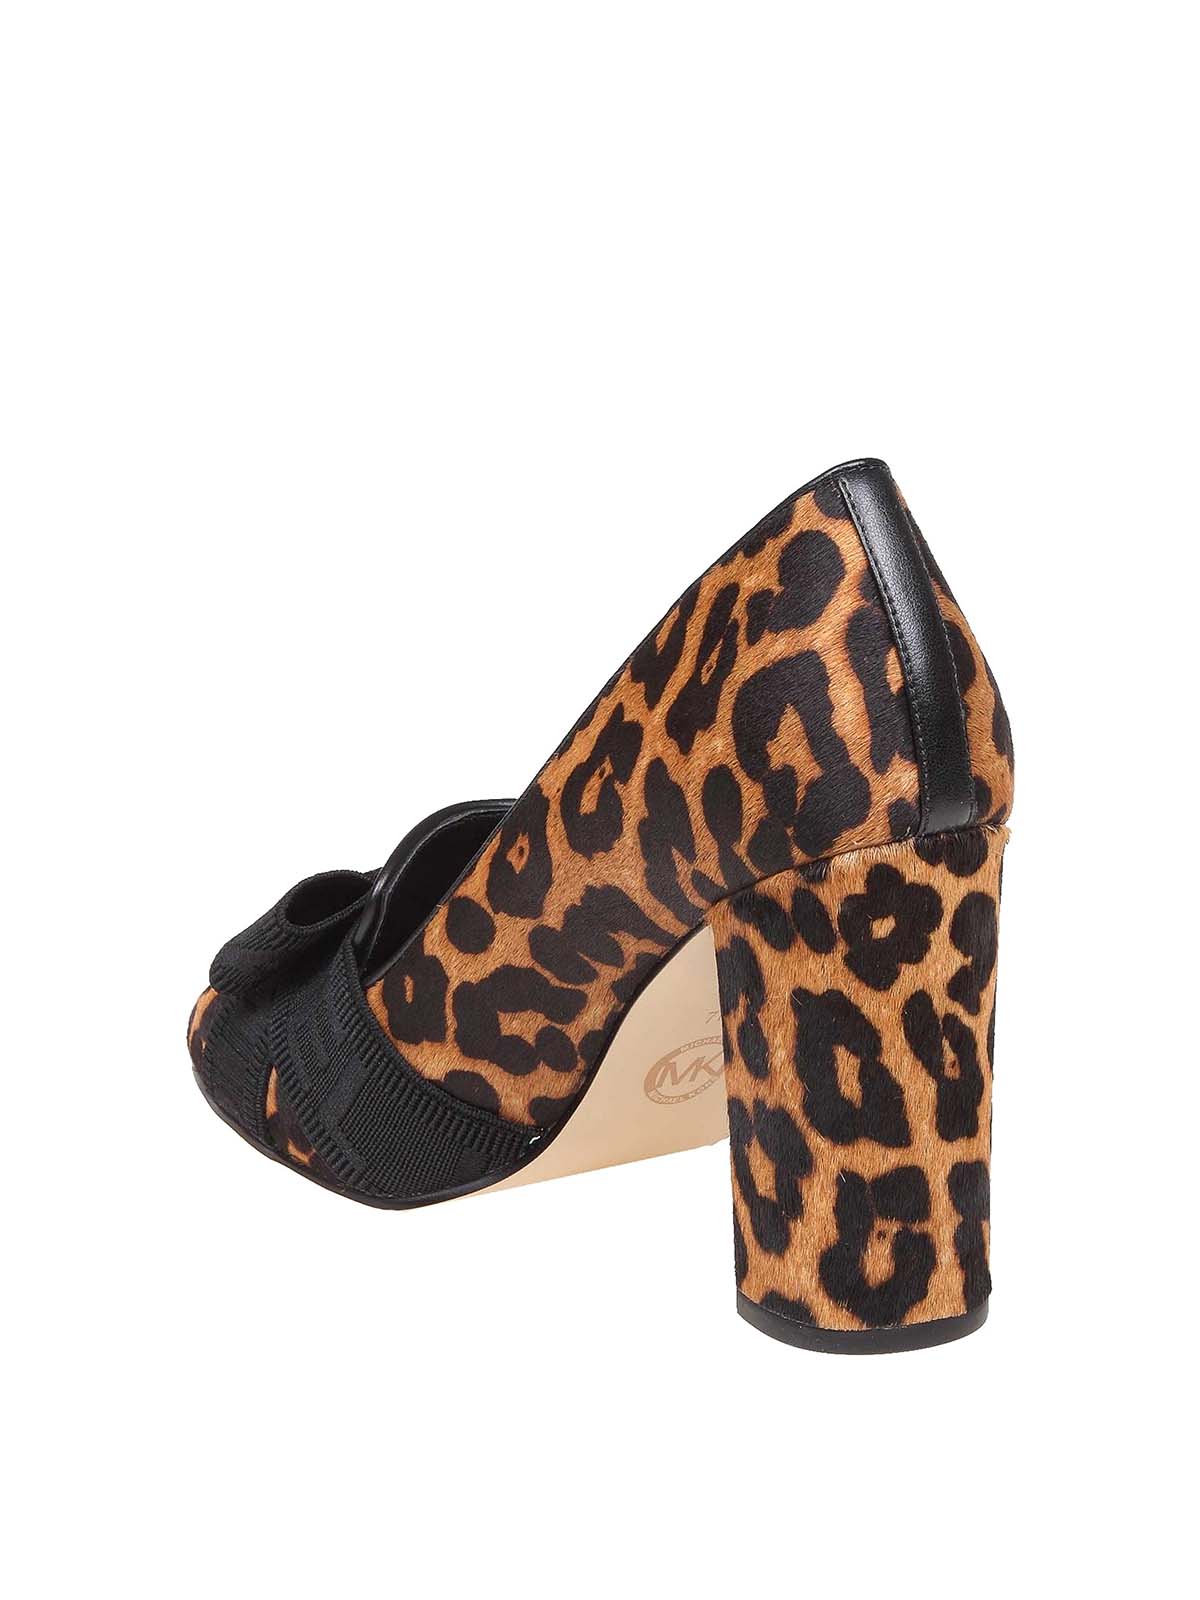 Michael Kors BlackWhite Keaton Cheetah Print Slip On Sneakers Women039s  Size 7  eBay